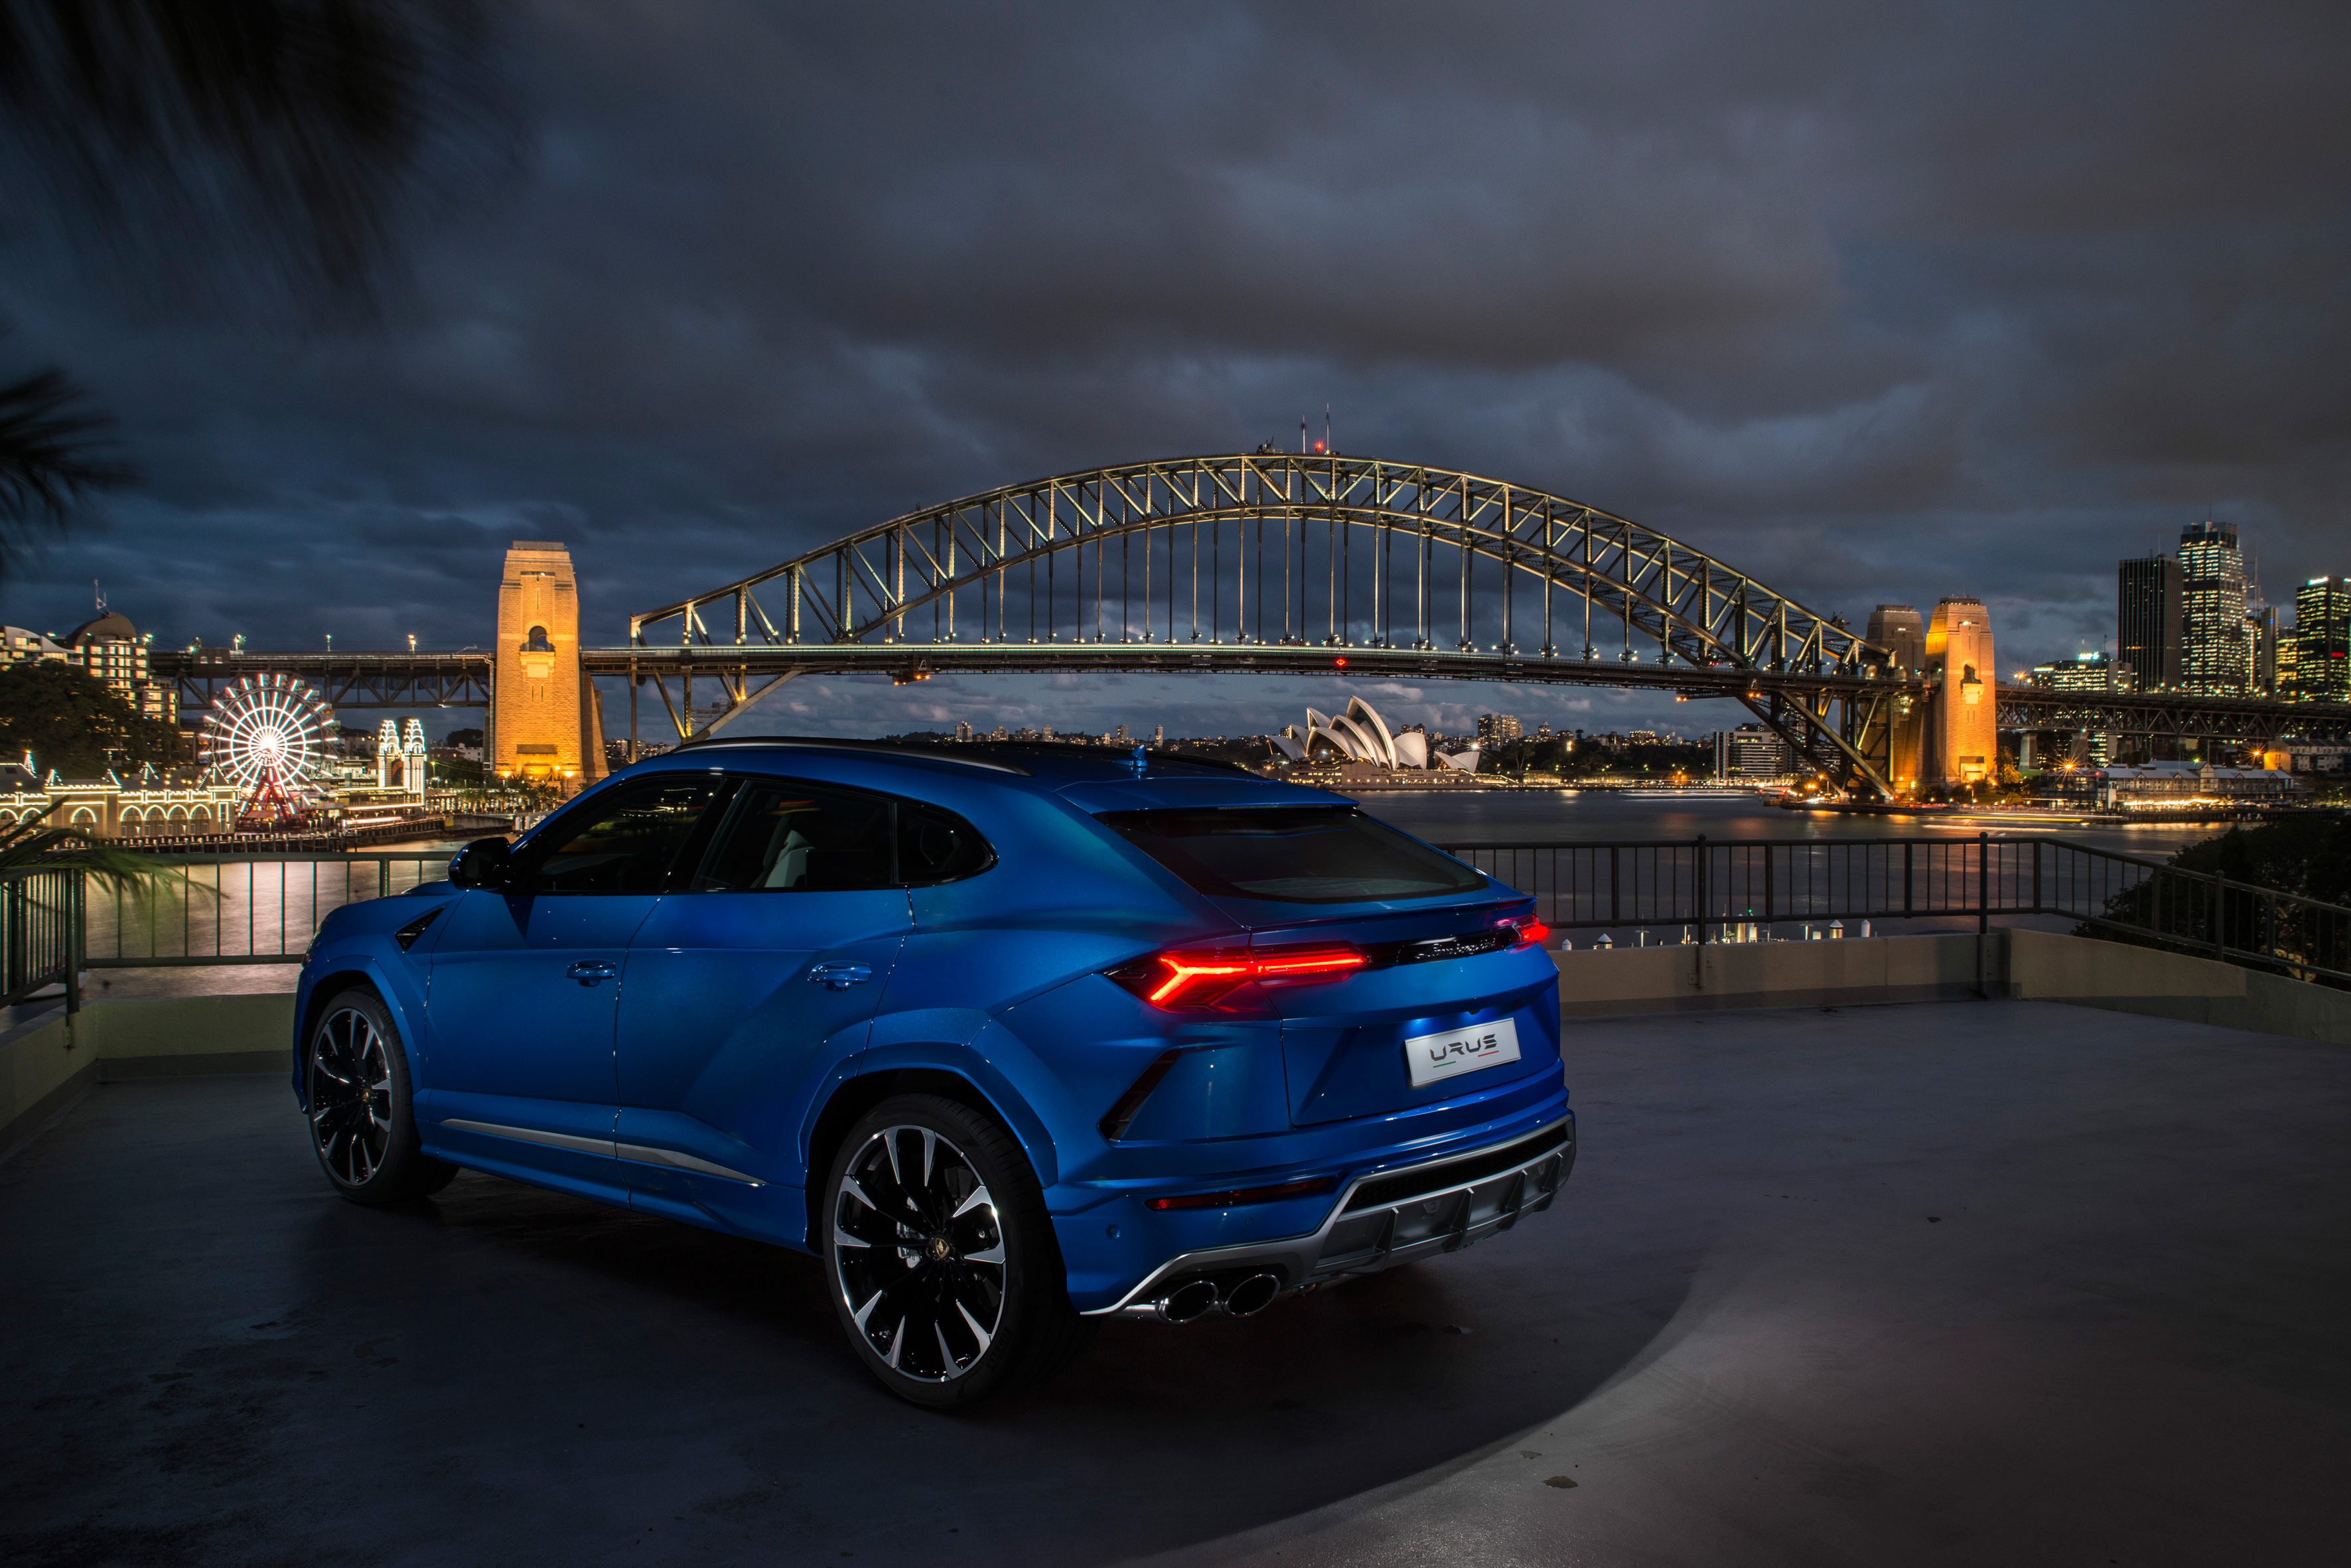 Blue Lamborghini Urus against the backdrop of a large bridge